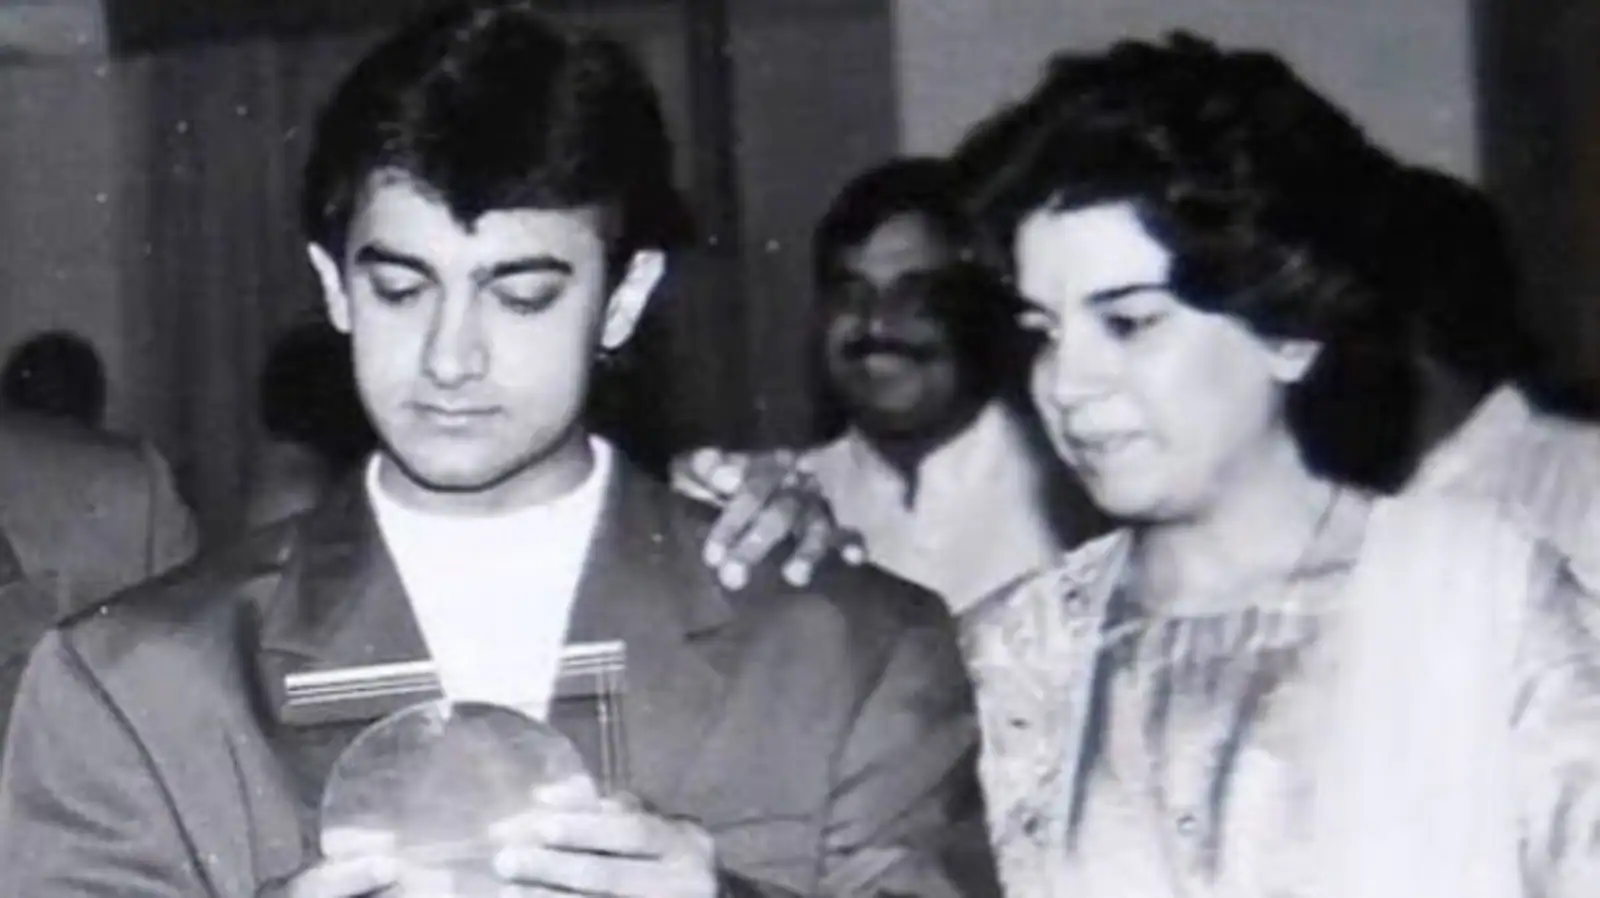 aamir khan and reena dutta in balck and white photo